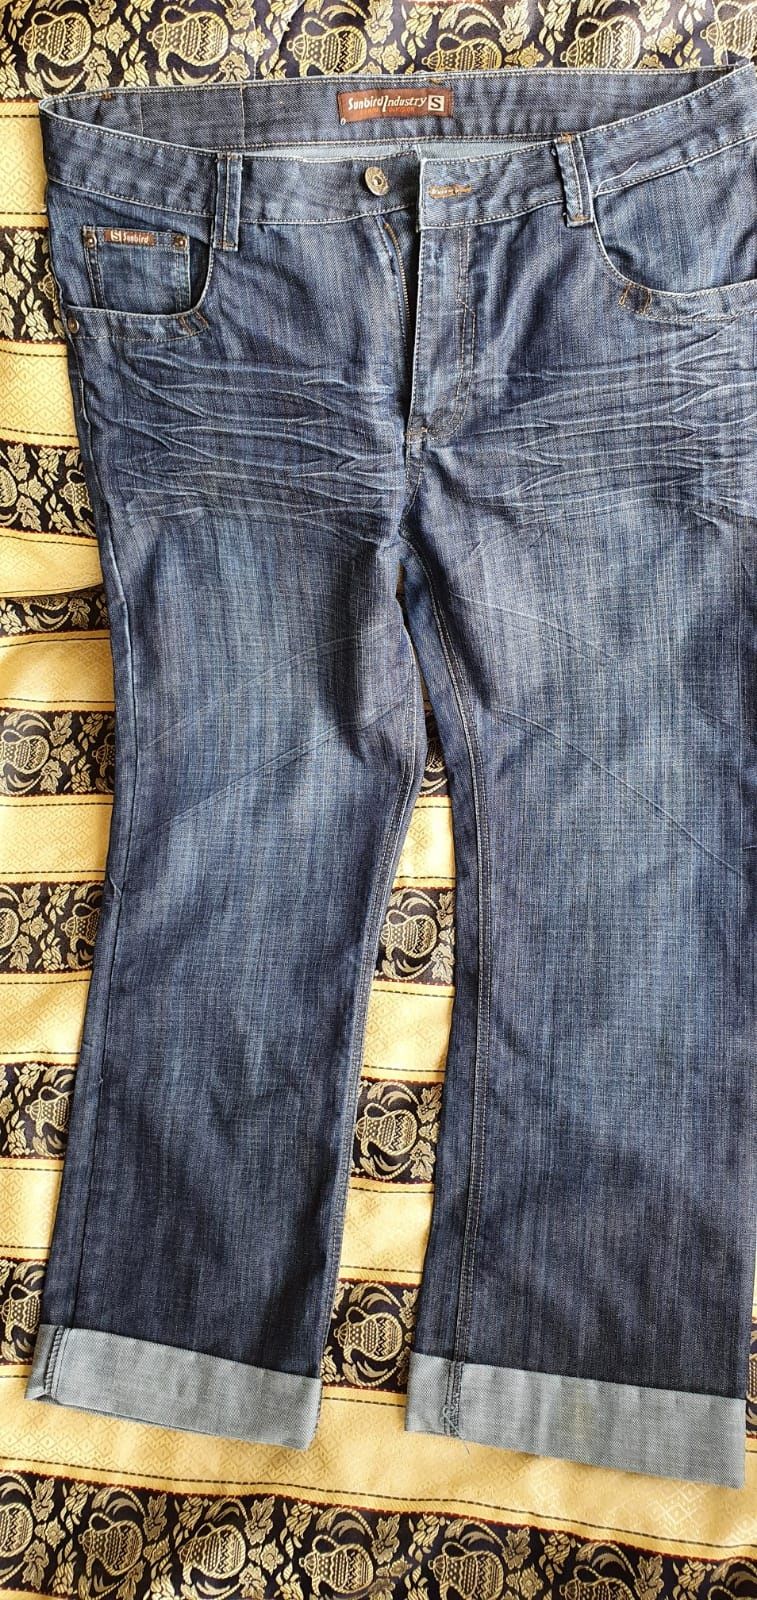 Blugi pantaloni Denim Division Sunbird Industry Originali
Size XL 38